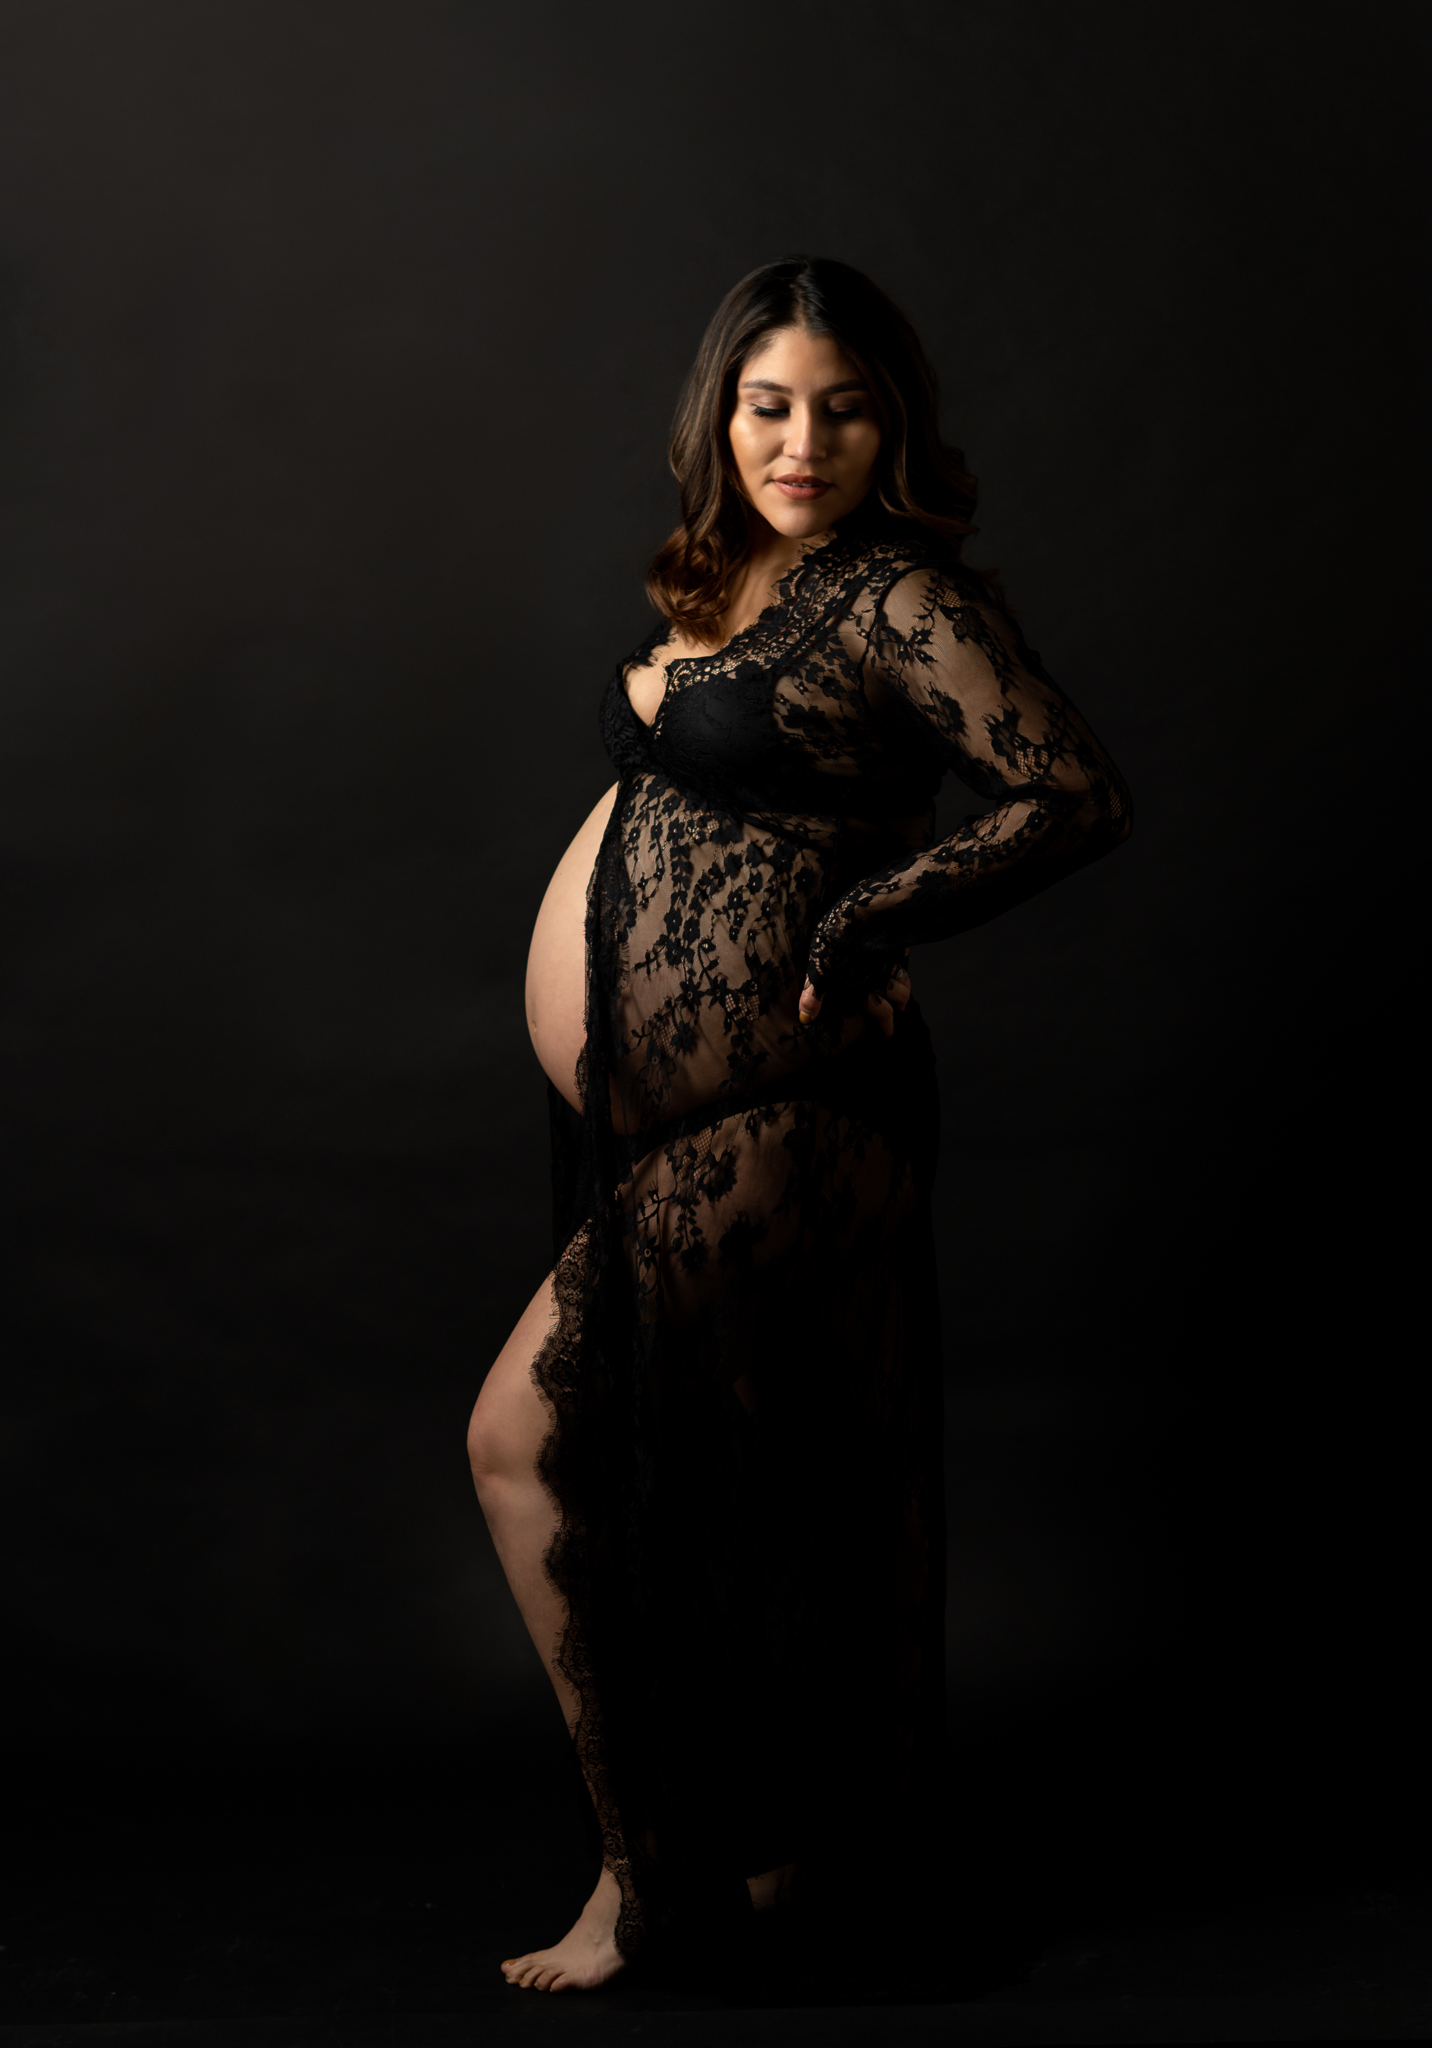 studio maternity photo in black lace dress